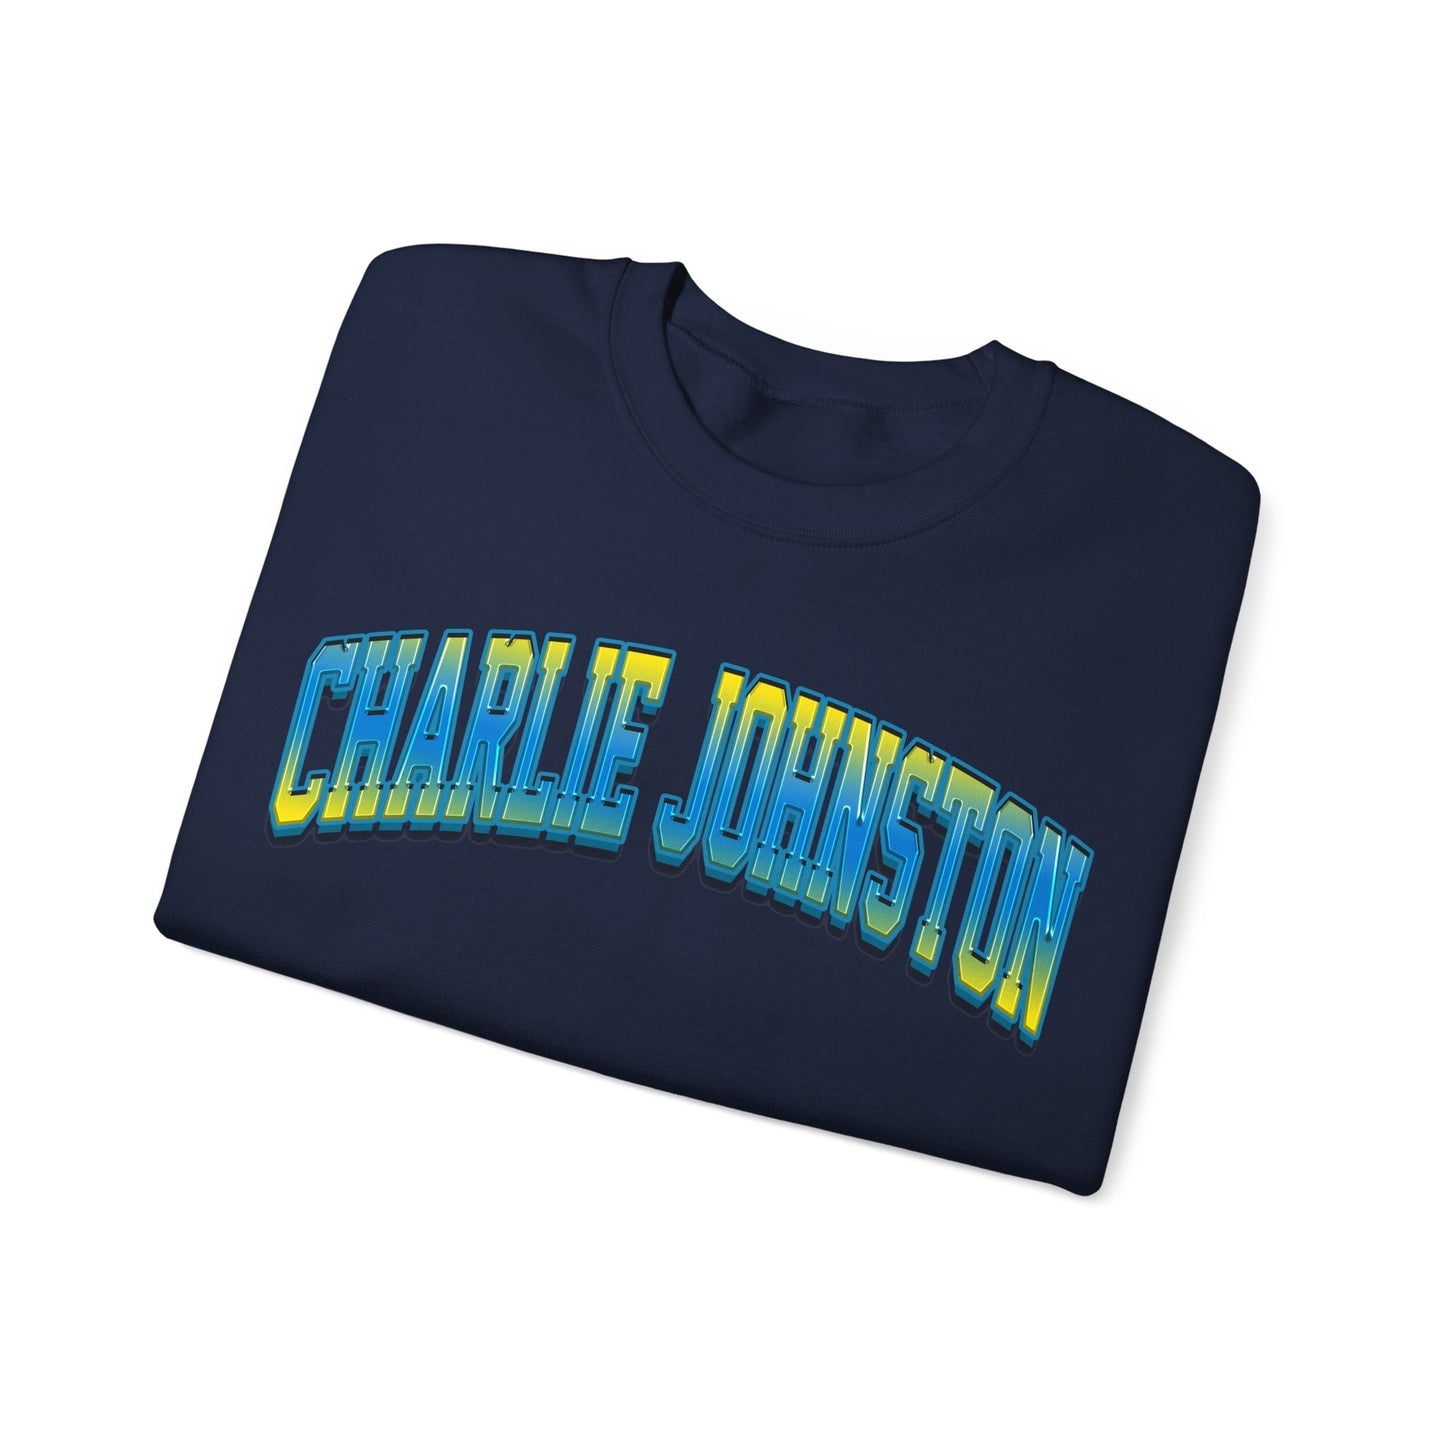 Charlie Johnston Crewneck Sweatshirt